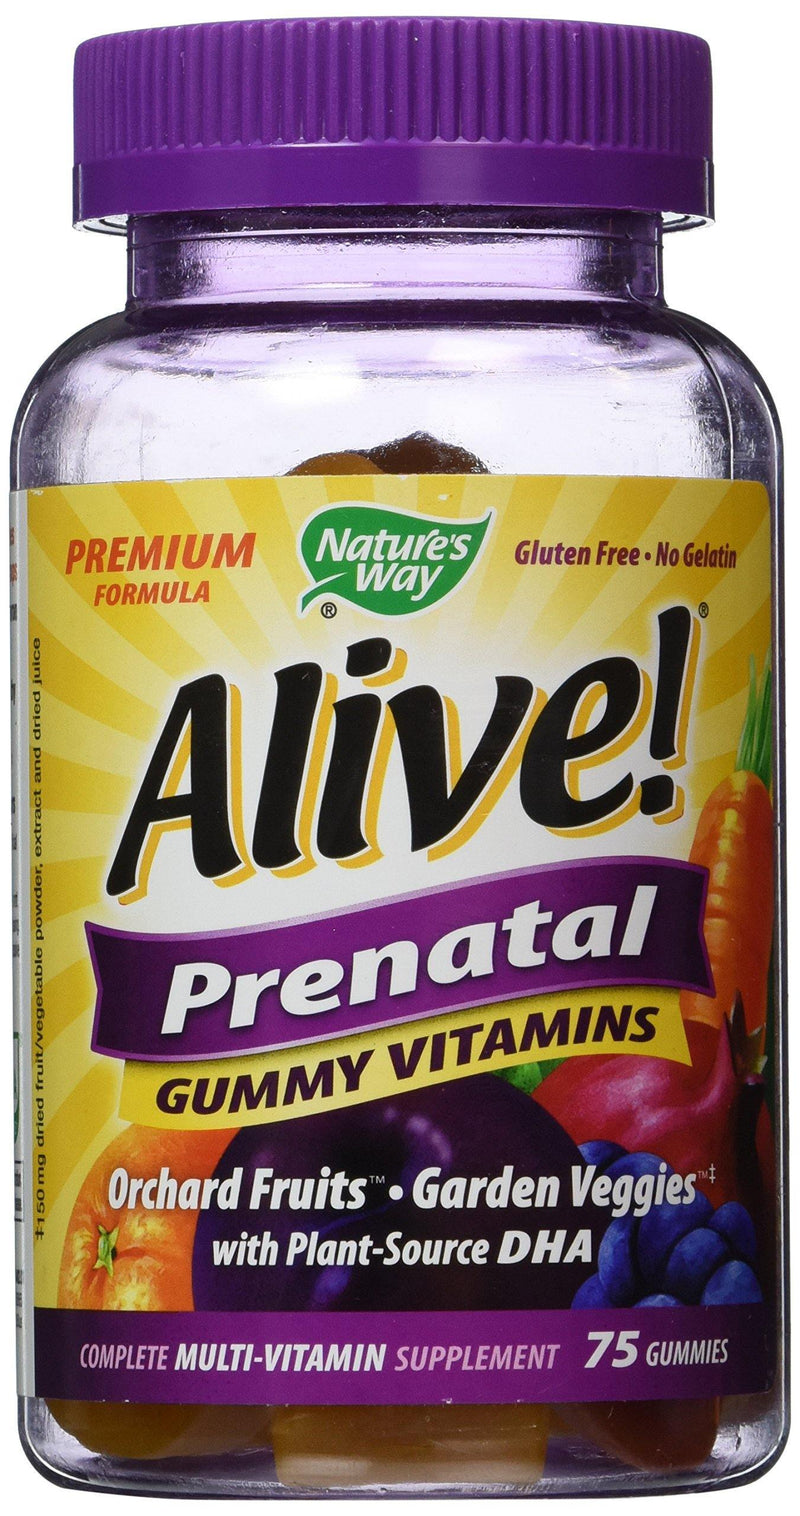 Nature's Way Alive!® Prenatal Premium Gummy Multivitamin with DHA, Fruit and Veggie Blend (150mg per serving), Full B Vitamin Complex, Gluten Free, Made with Pectin, 75 Gummies - Vitamins Emporium